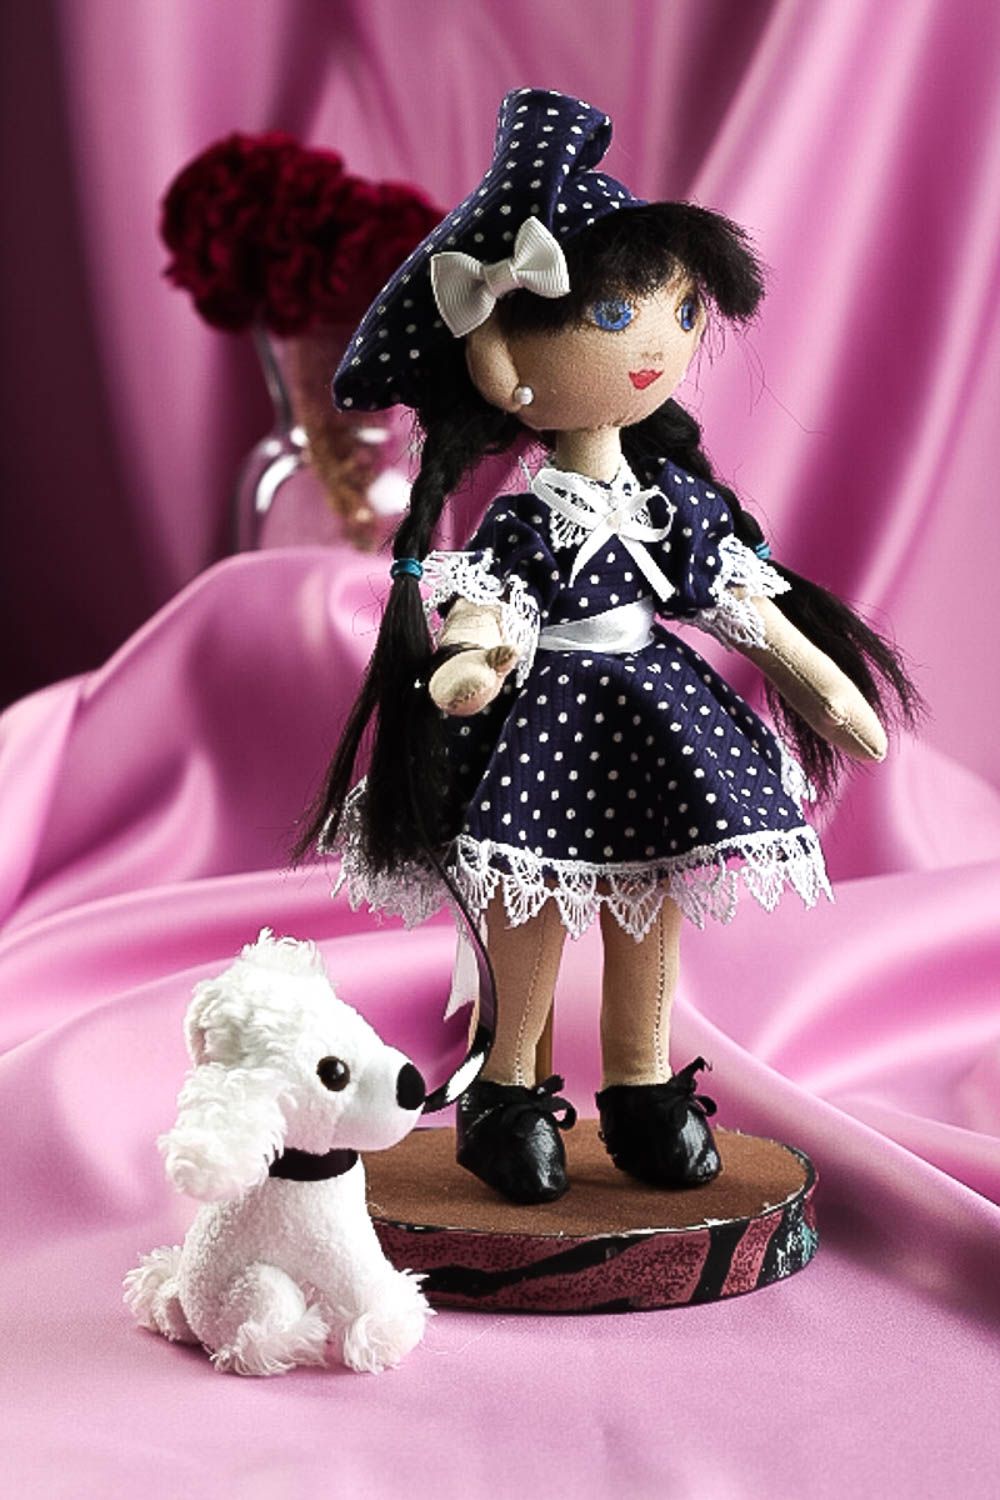 Handmade doll designer doll interior doll soft doll for children decor ideas photo 1